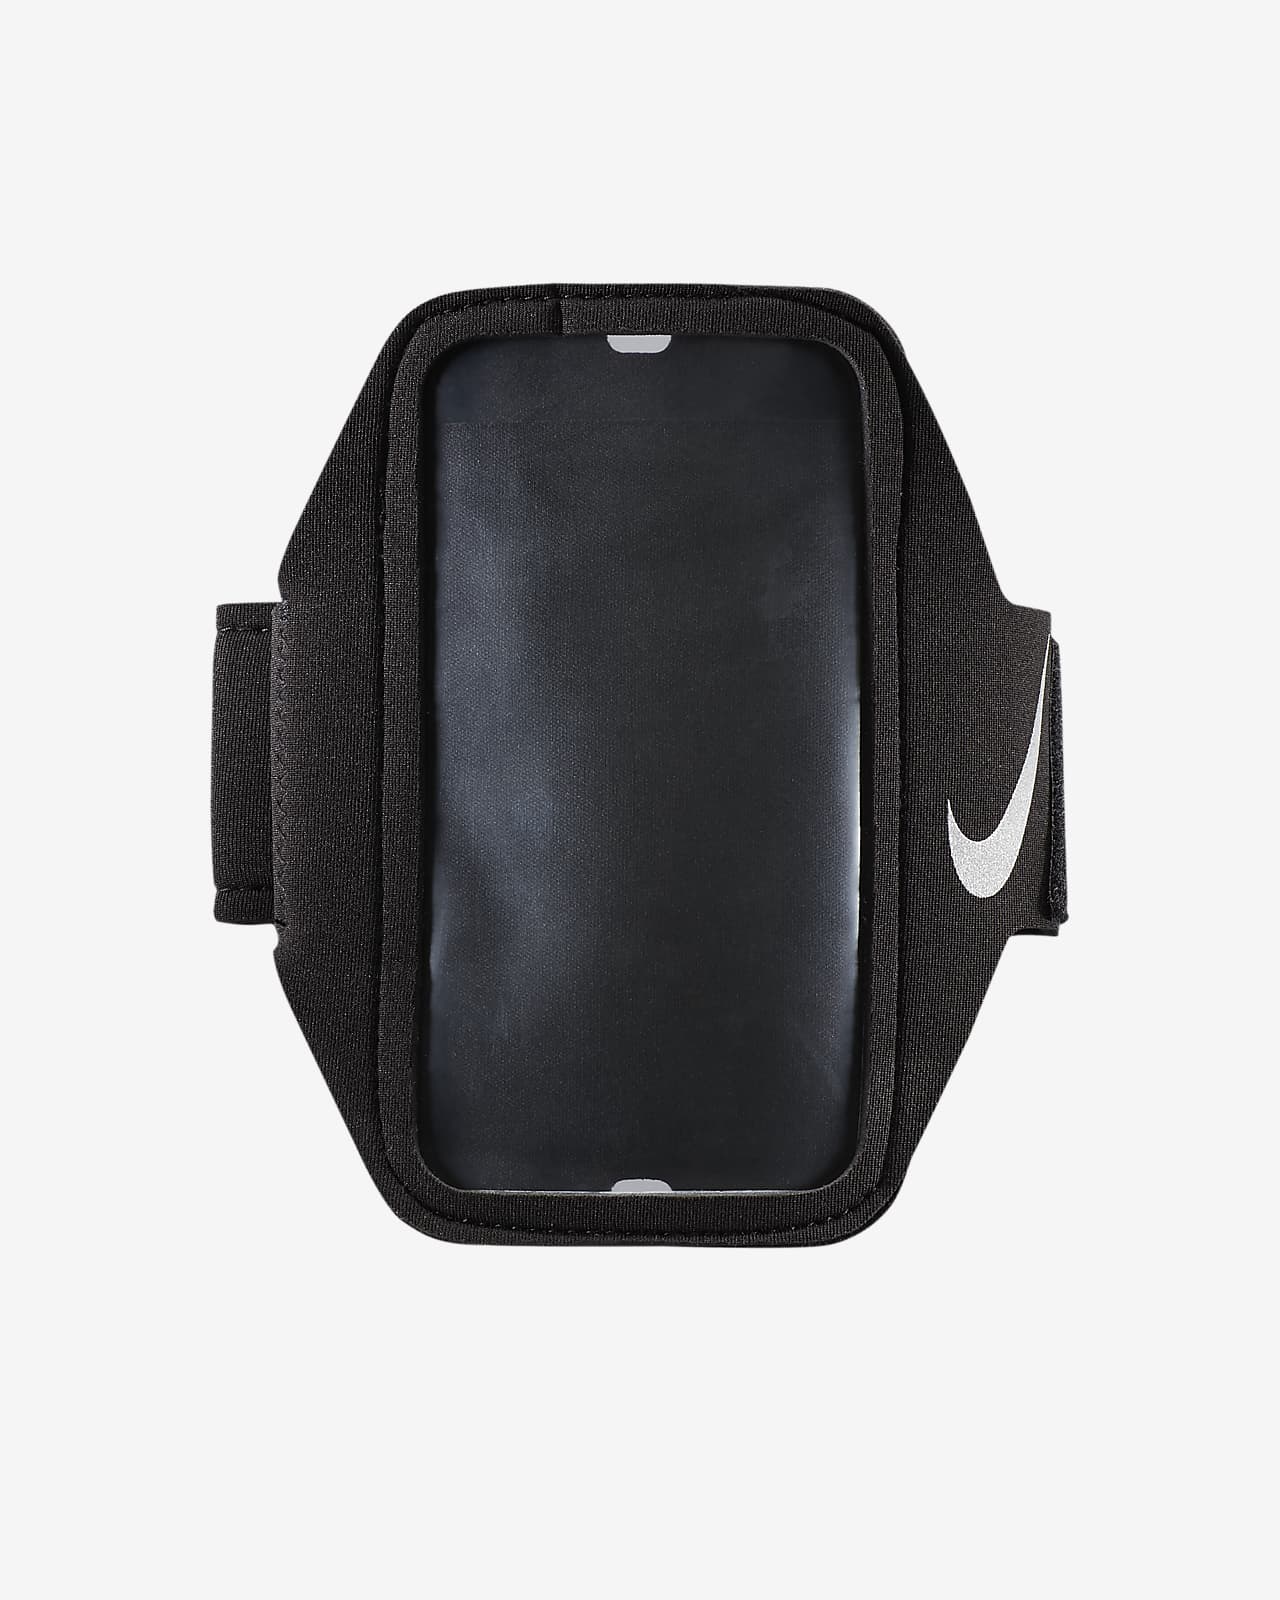 Armband Nike Lean